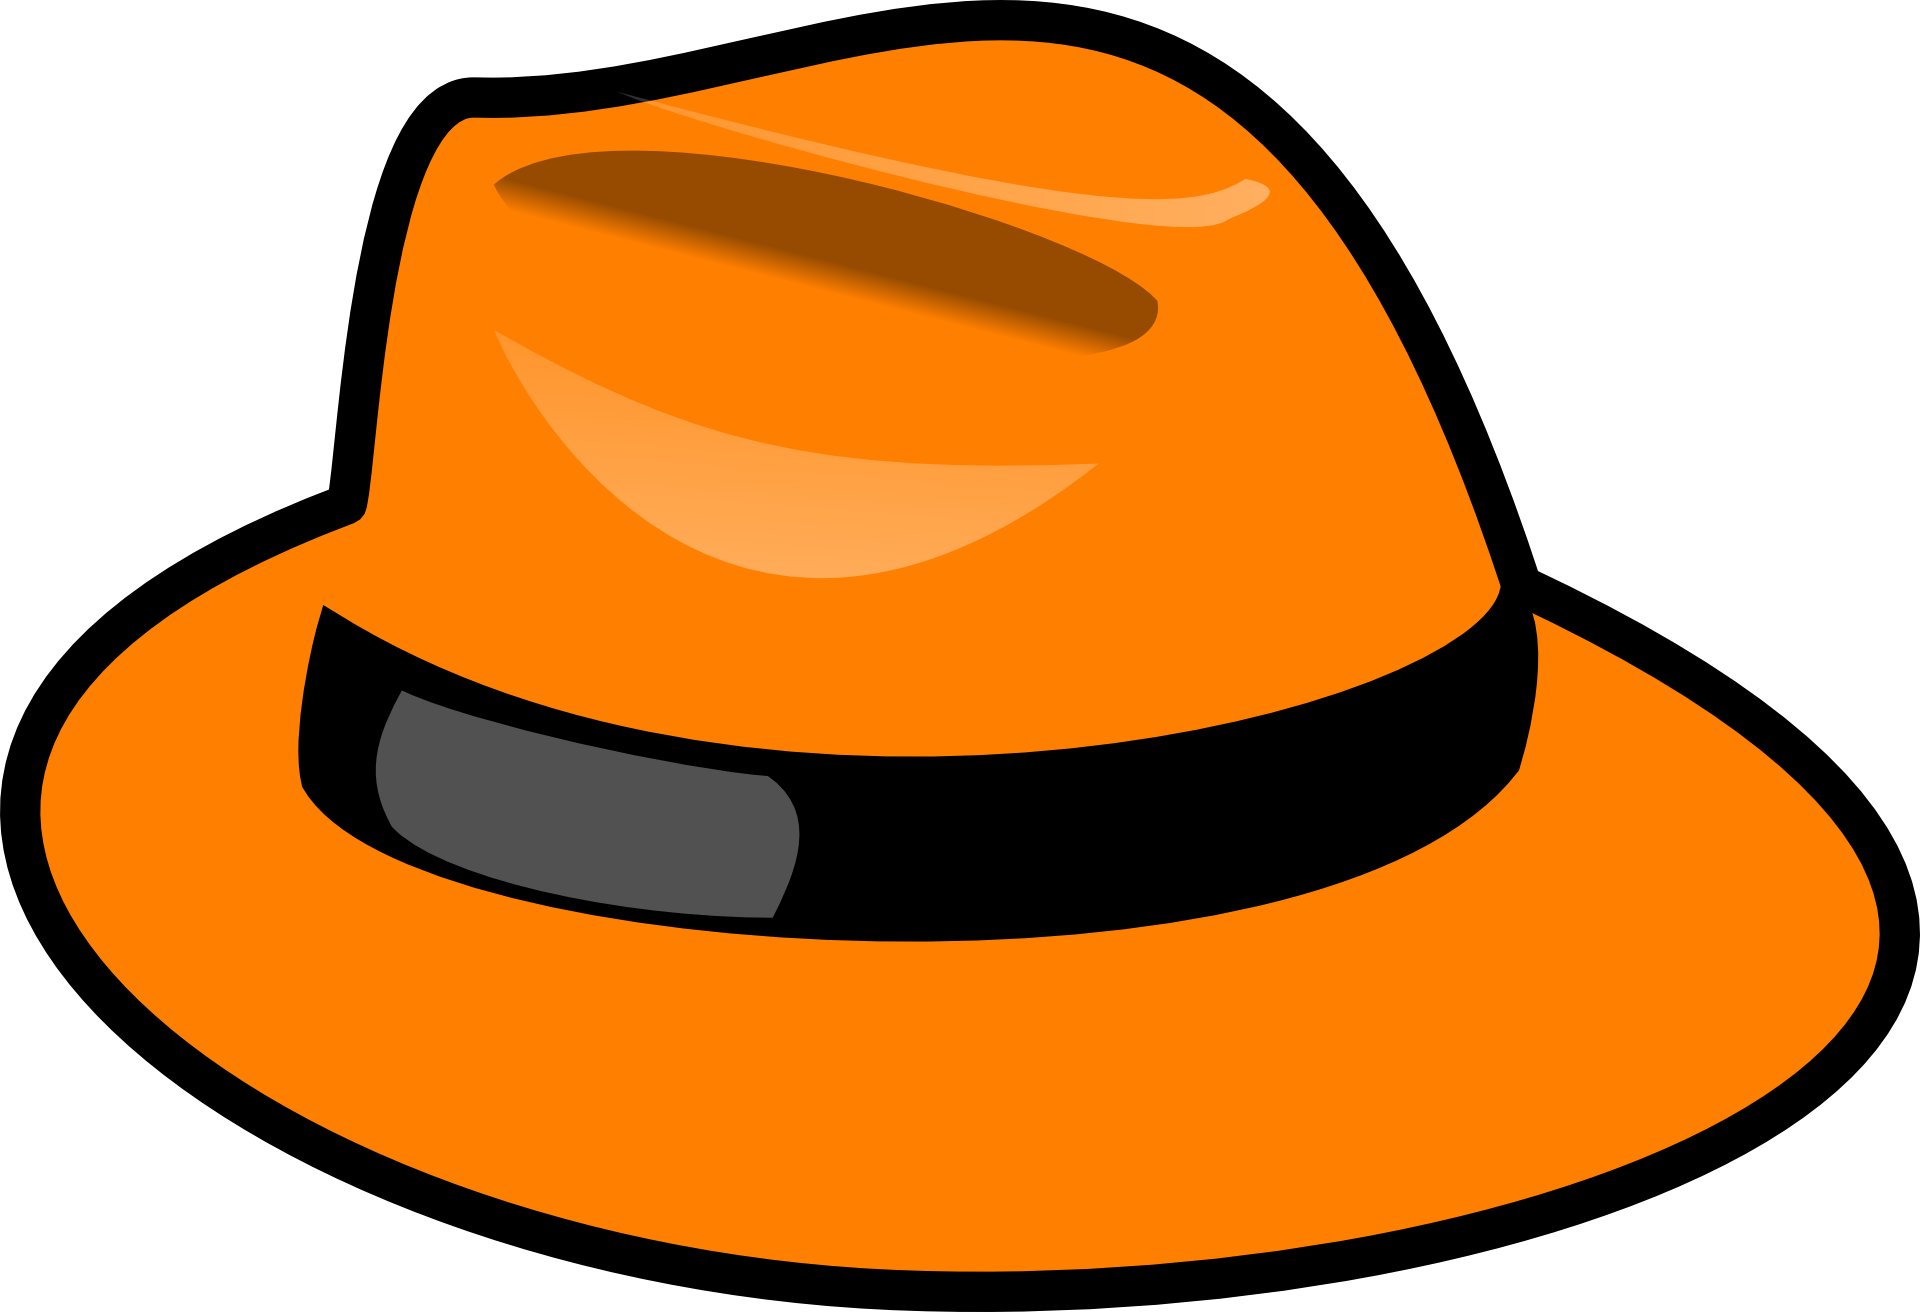 Hat bekommen. Шляпы мультяшные. Мультяшные шляпки. Шляпа оранжевая. Шляпа рисунок.